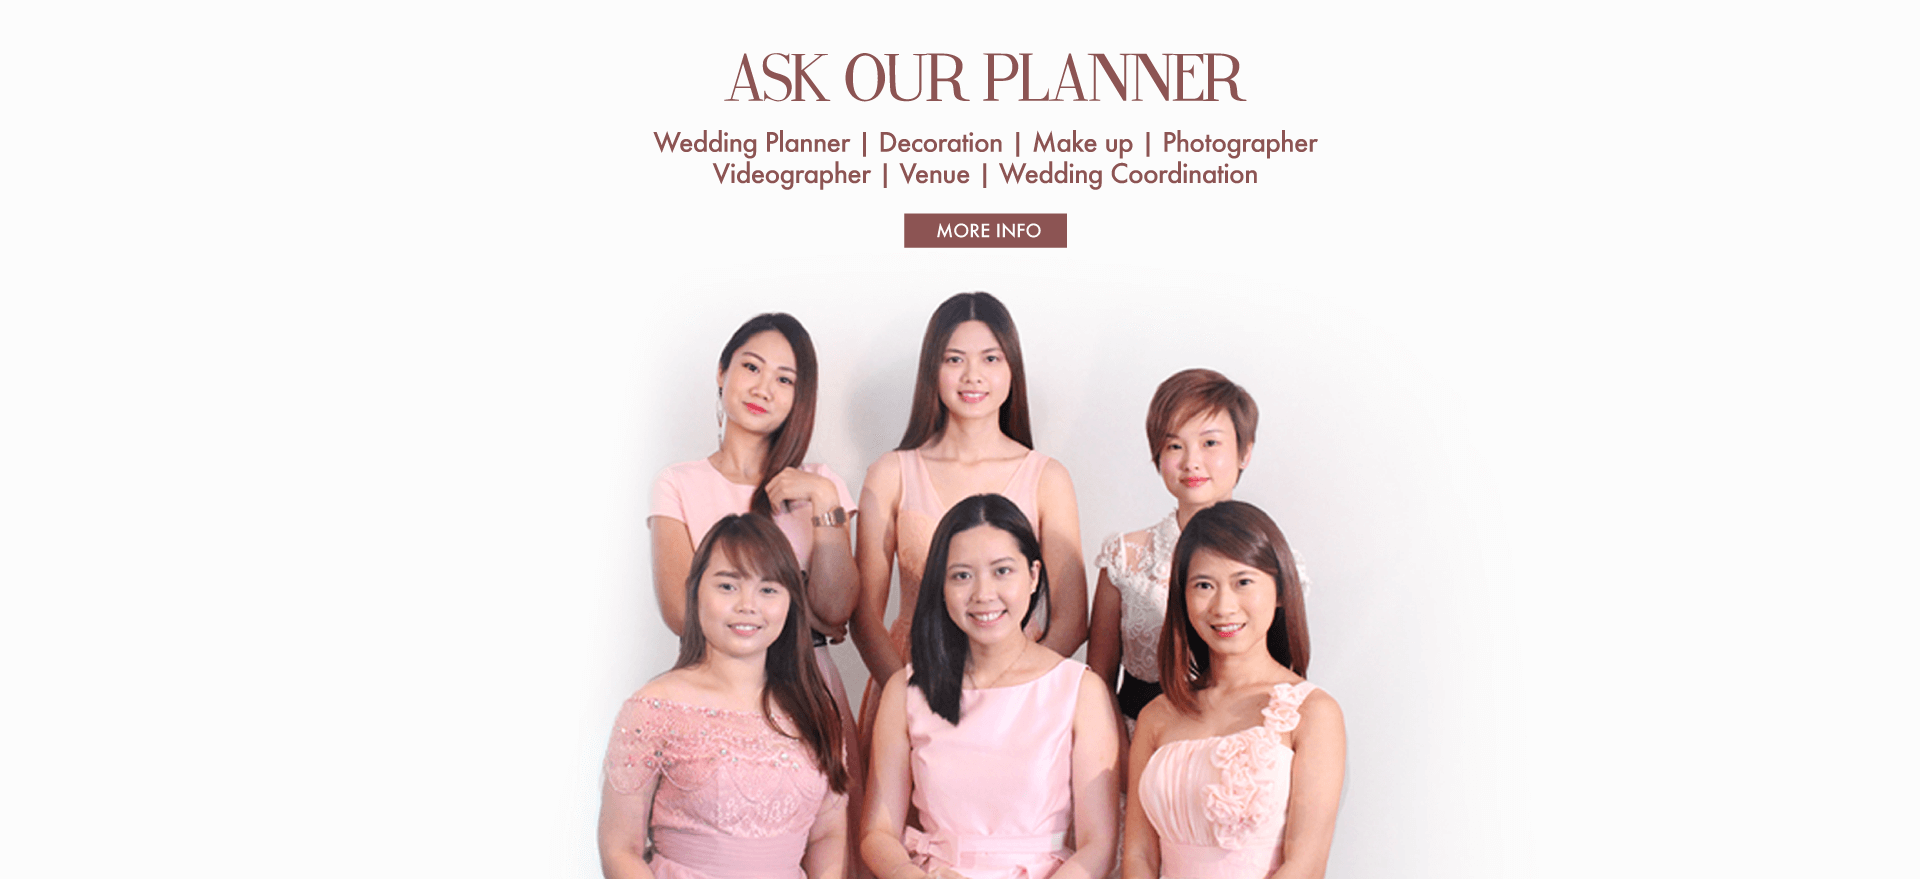 Wedding Planning Service